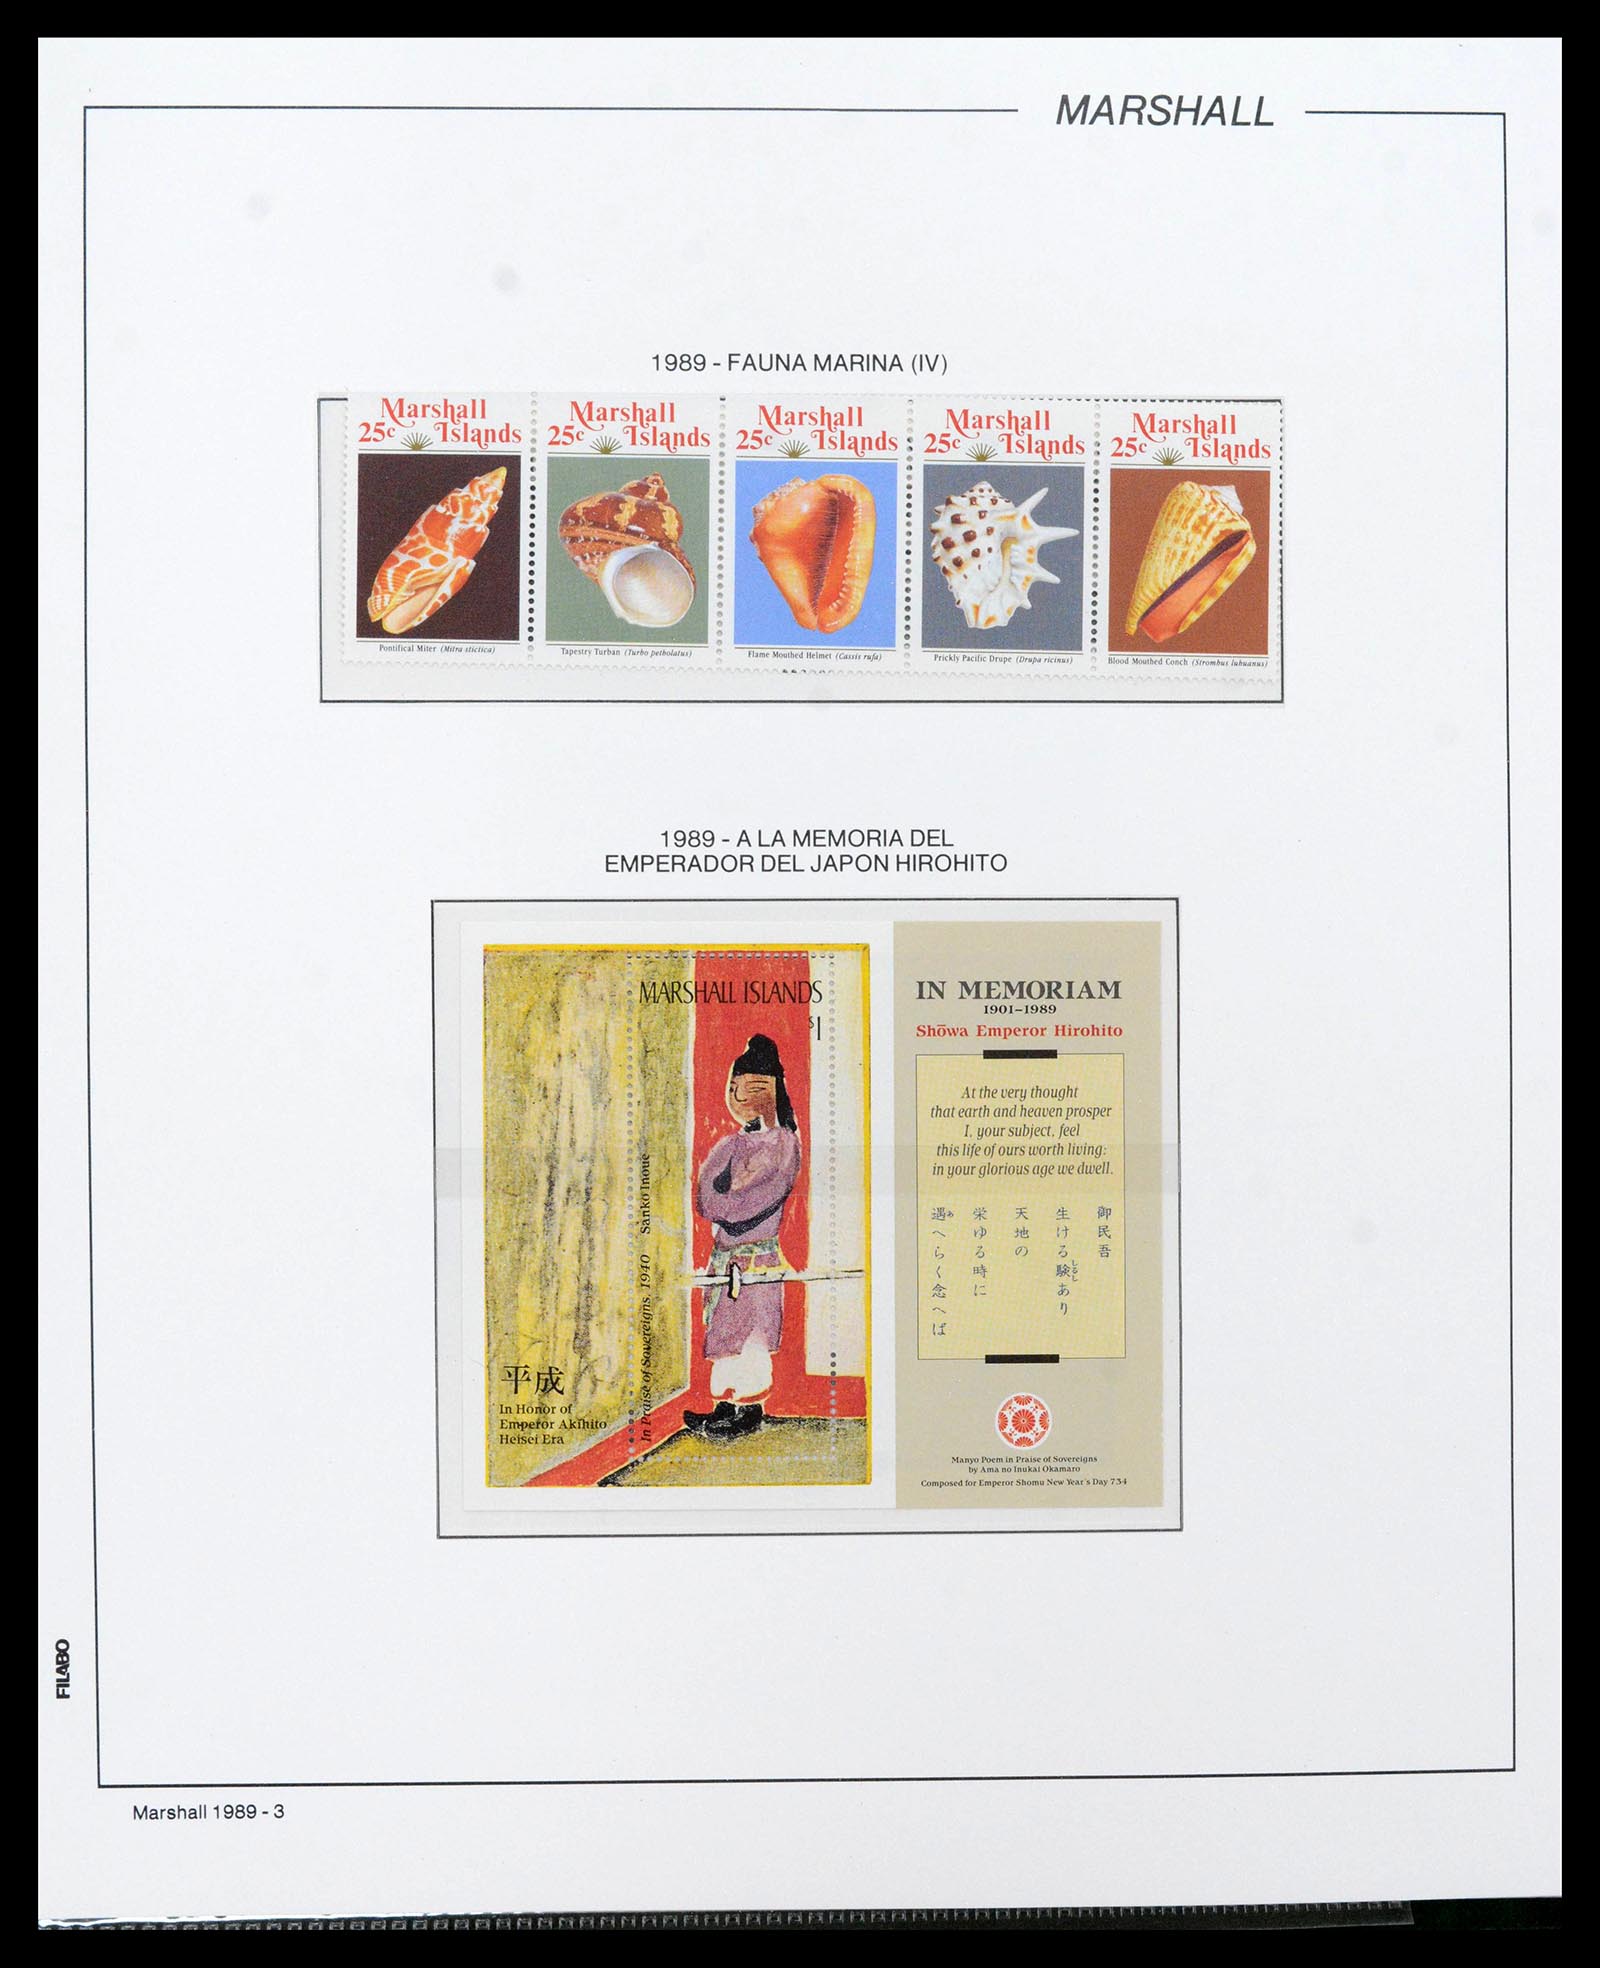 39222 0137 - Stamp collection 39222 Palau, Micronesia and Marshall islands 1980-1995.